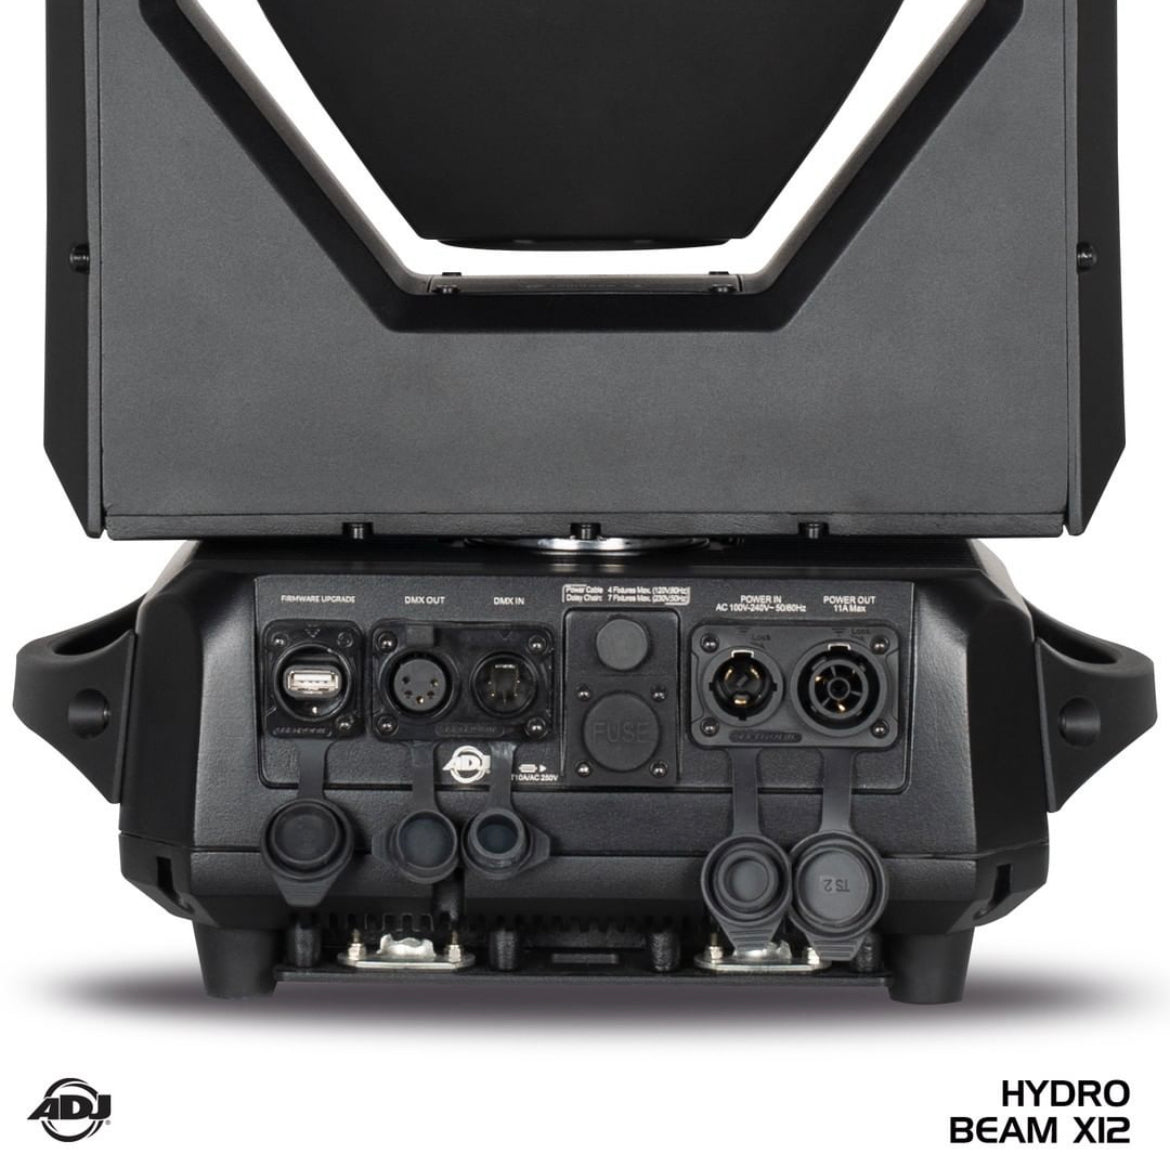 American DJ ADJ Hydro Beam X12 IP65-rated Moving Head [B-STOCK]